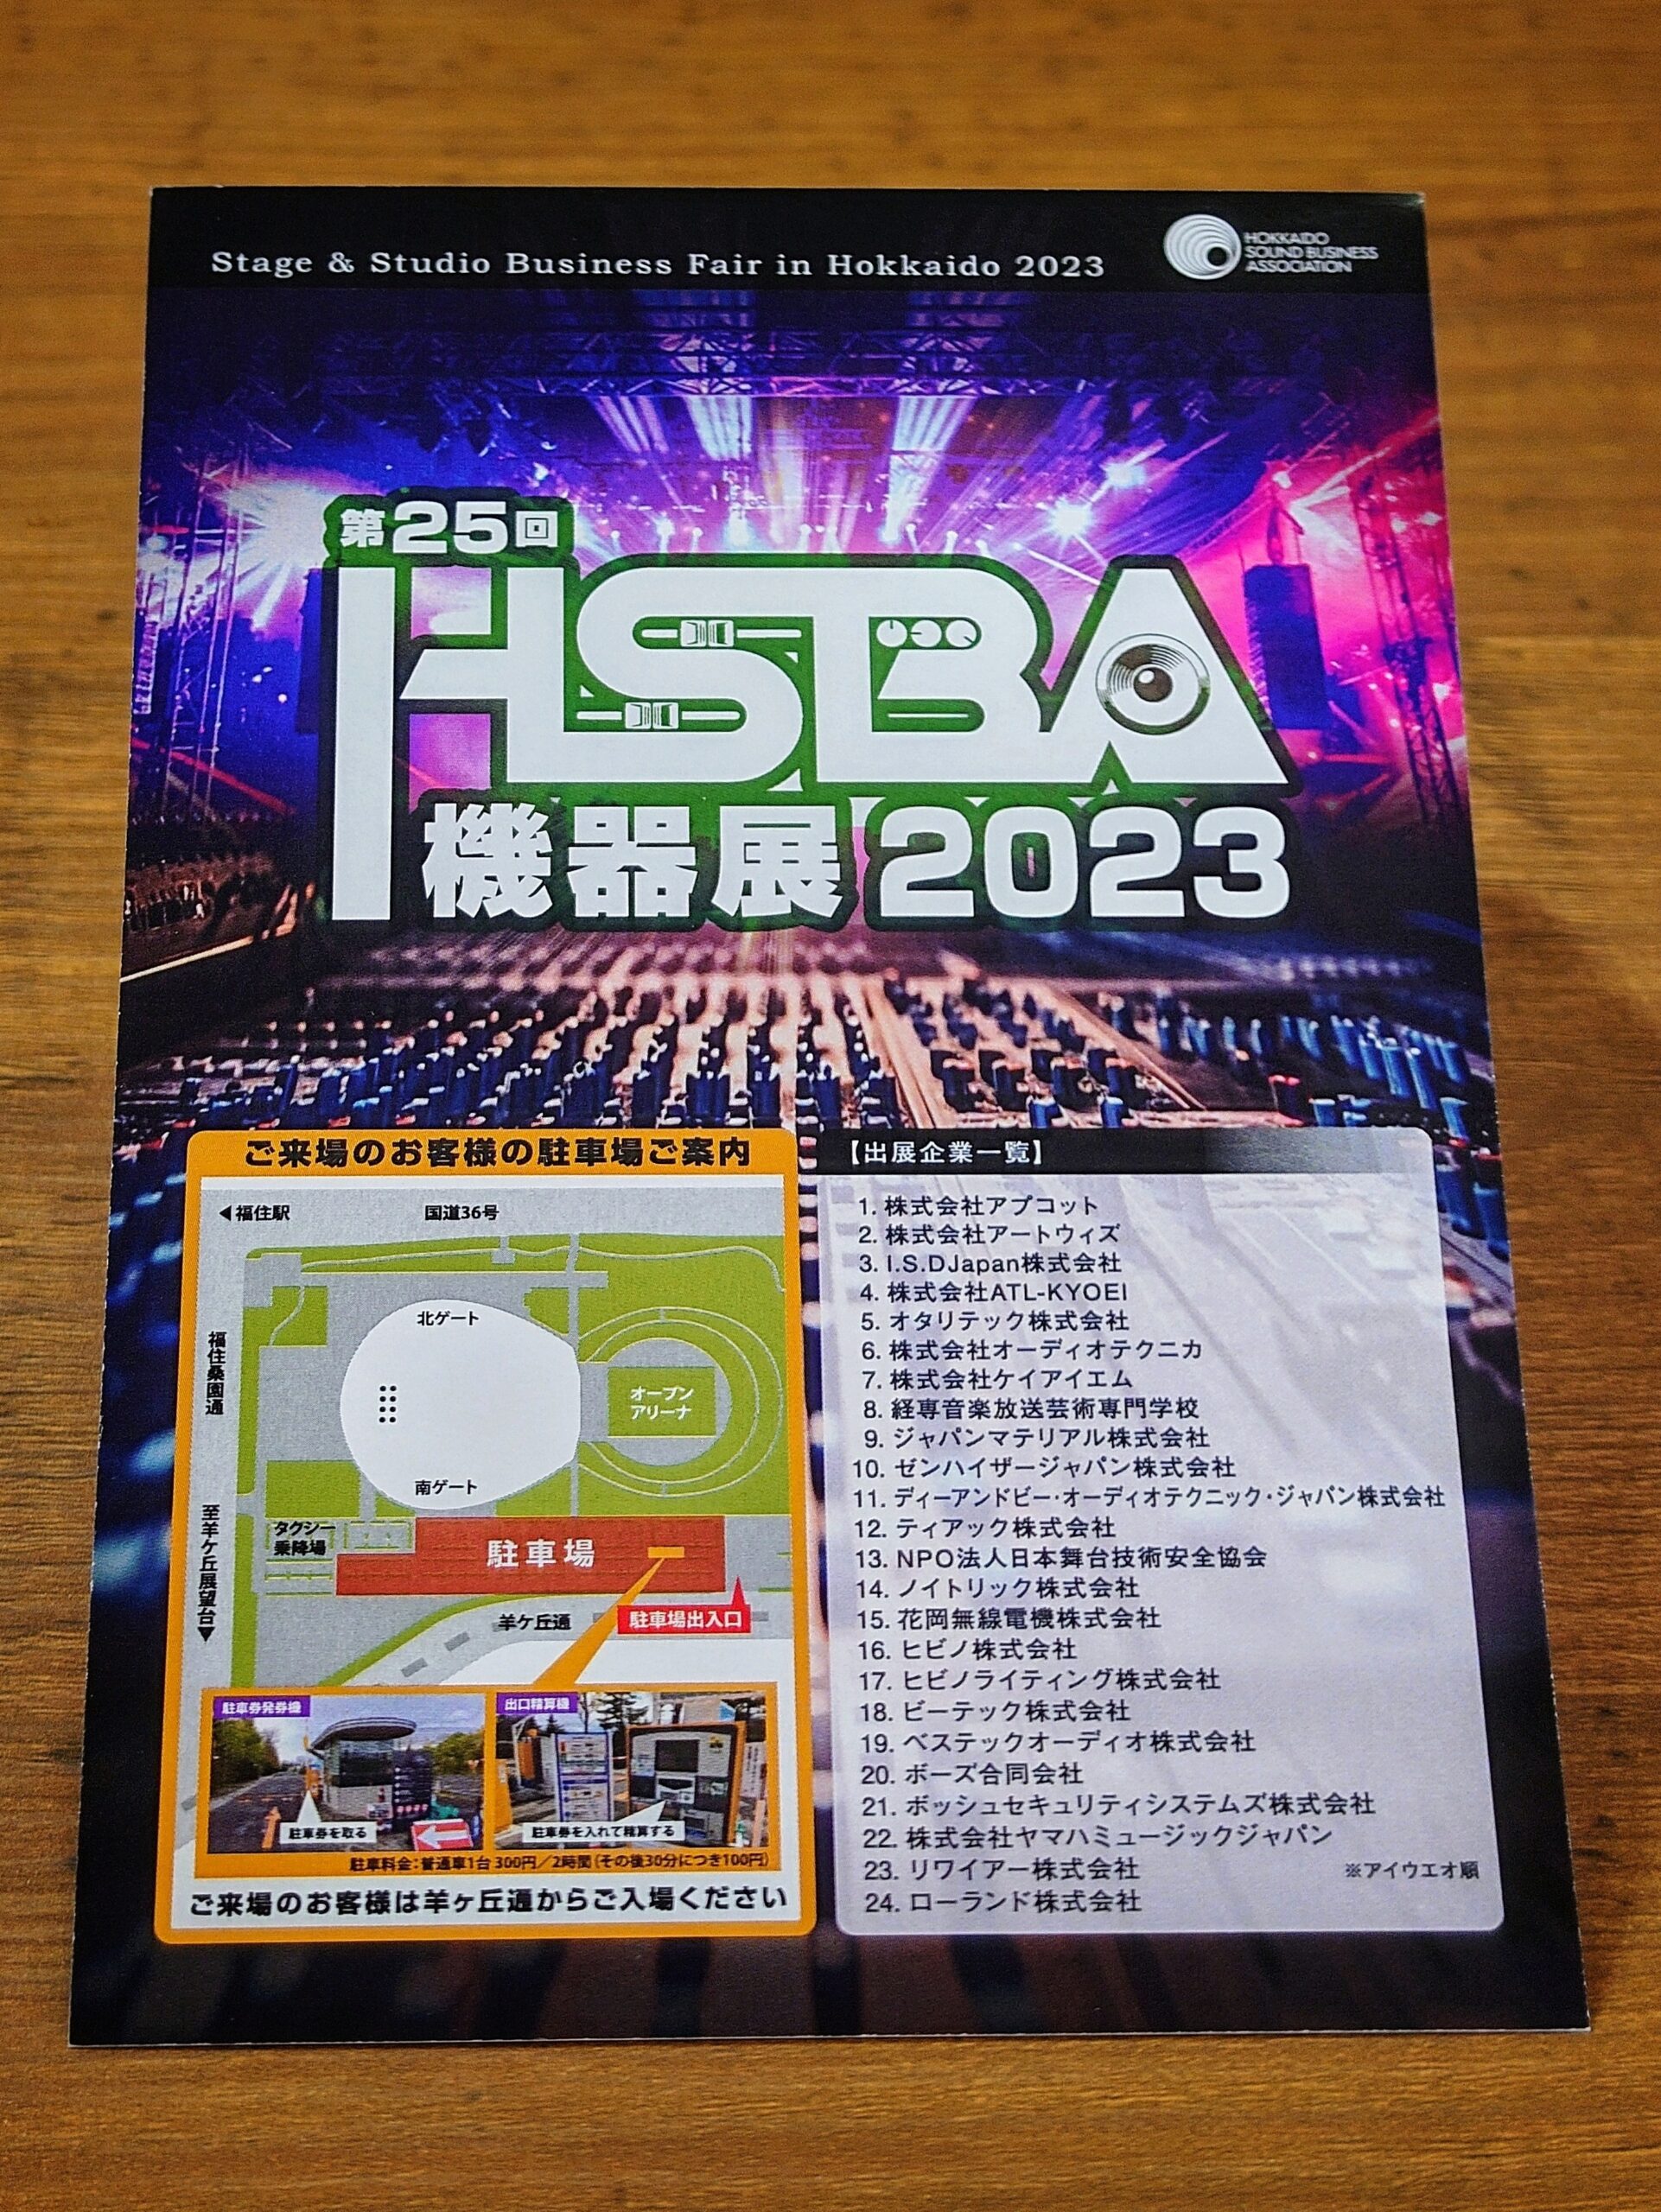 HSBA機器展　Stage & Studio Business Fair in Hokkaido Sapporo Dome 2023